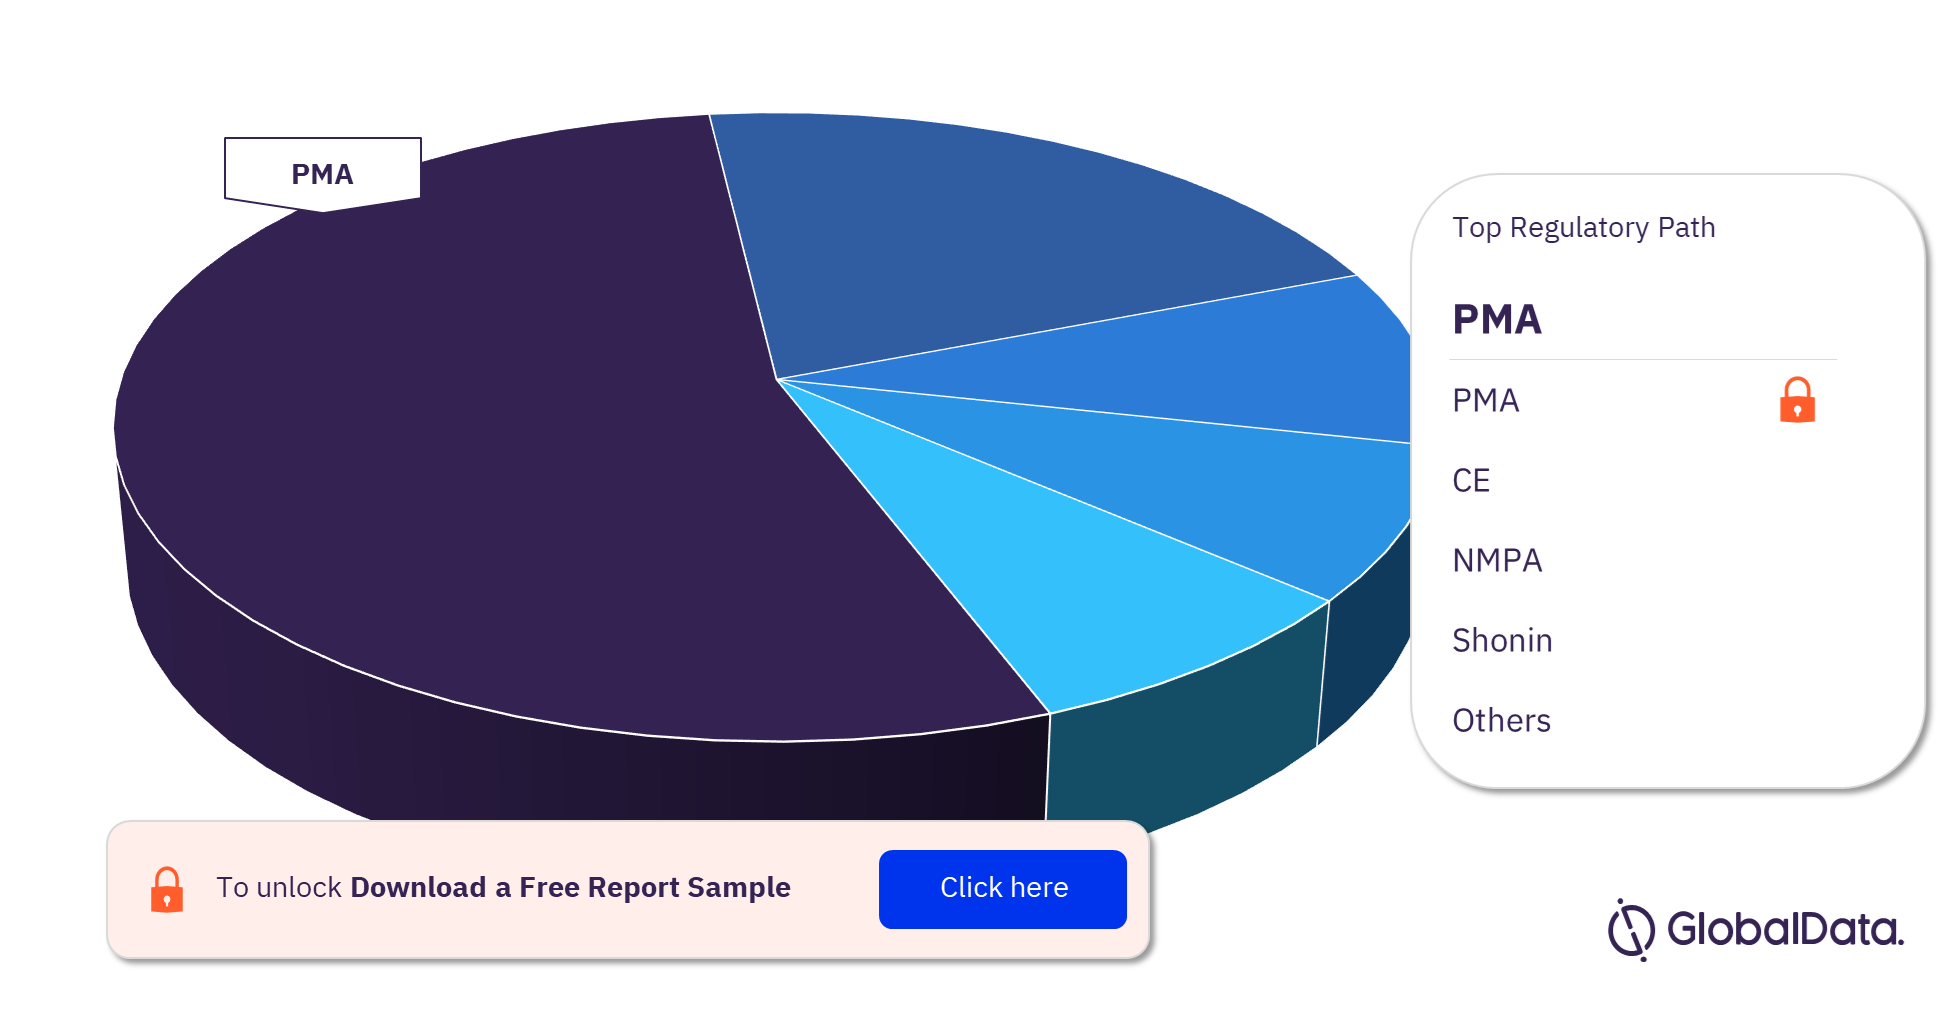 Coronary Stents Pipeline Market Analysis, by Regulatory Paths, 2023 (%)